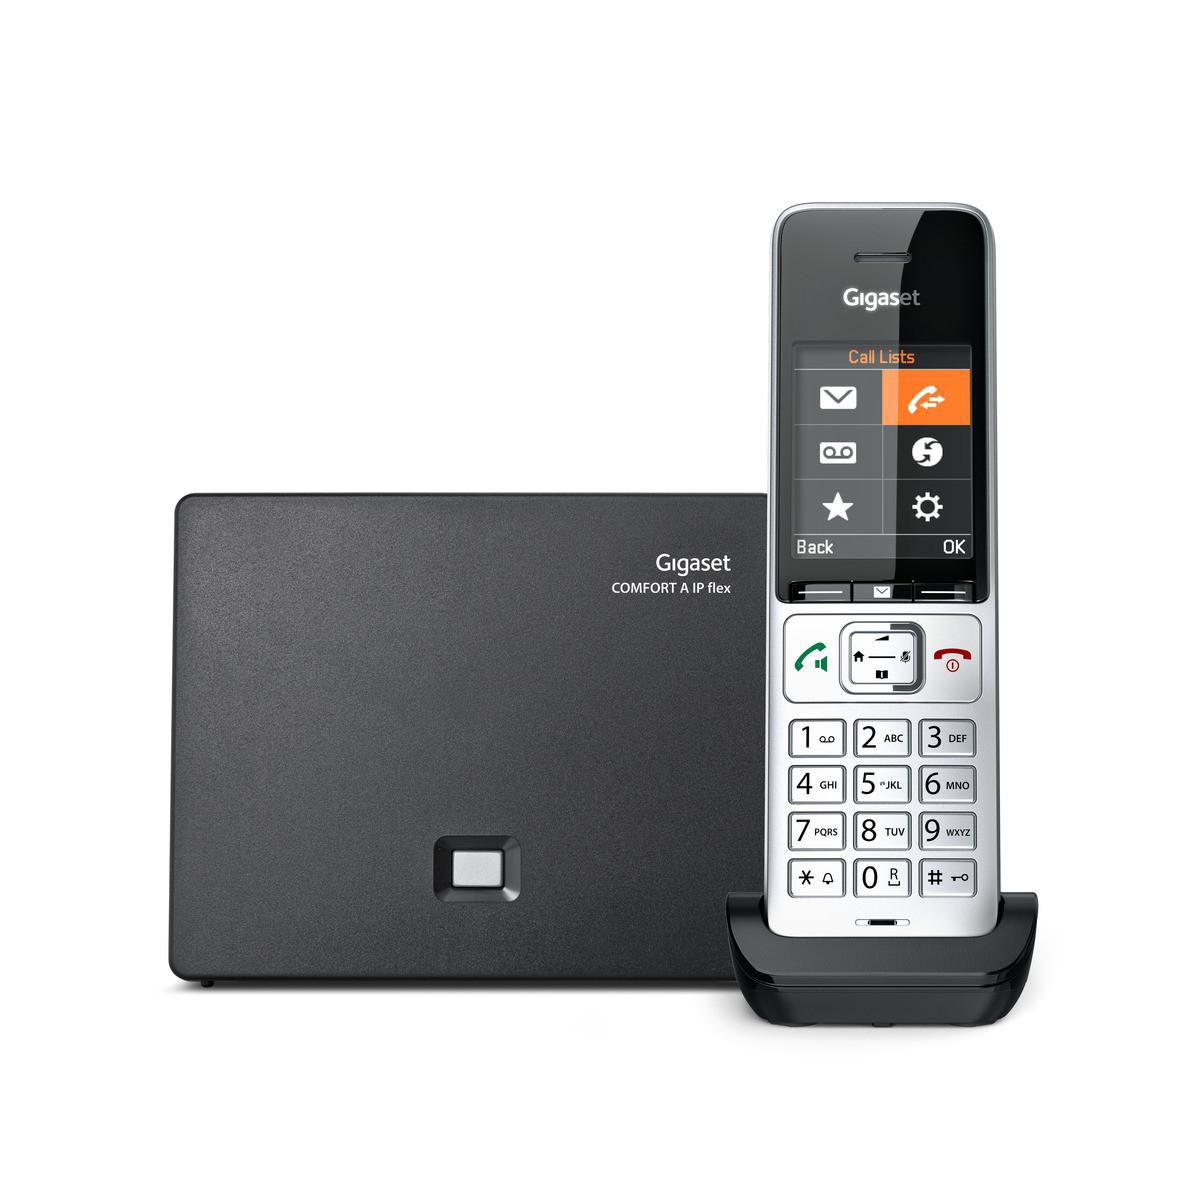 S30852-H3033-B101 UNIFY GIGASET OPENSTAGE Comfort 500A IP flex silber/schwarz - Phone - Voice-over-IP